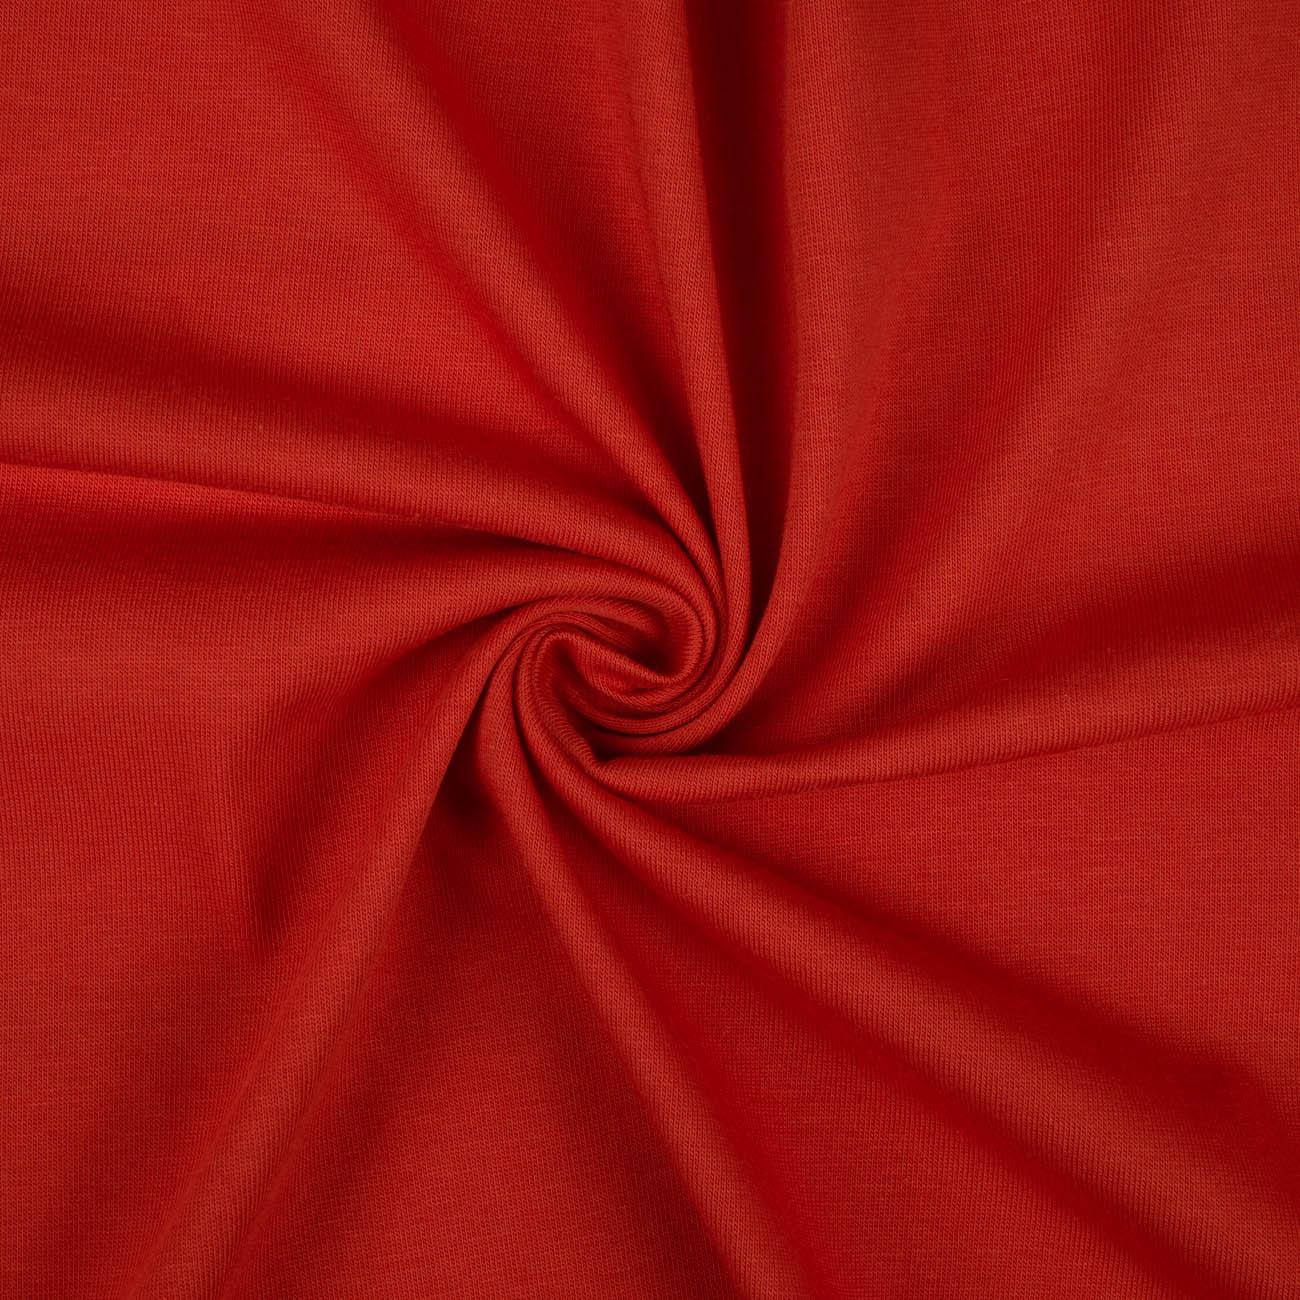 B-24 FIESTA / light red - T-shirt knit fabric 100% cotton T180